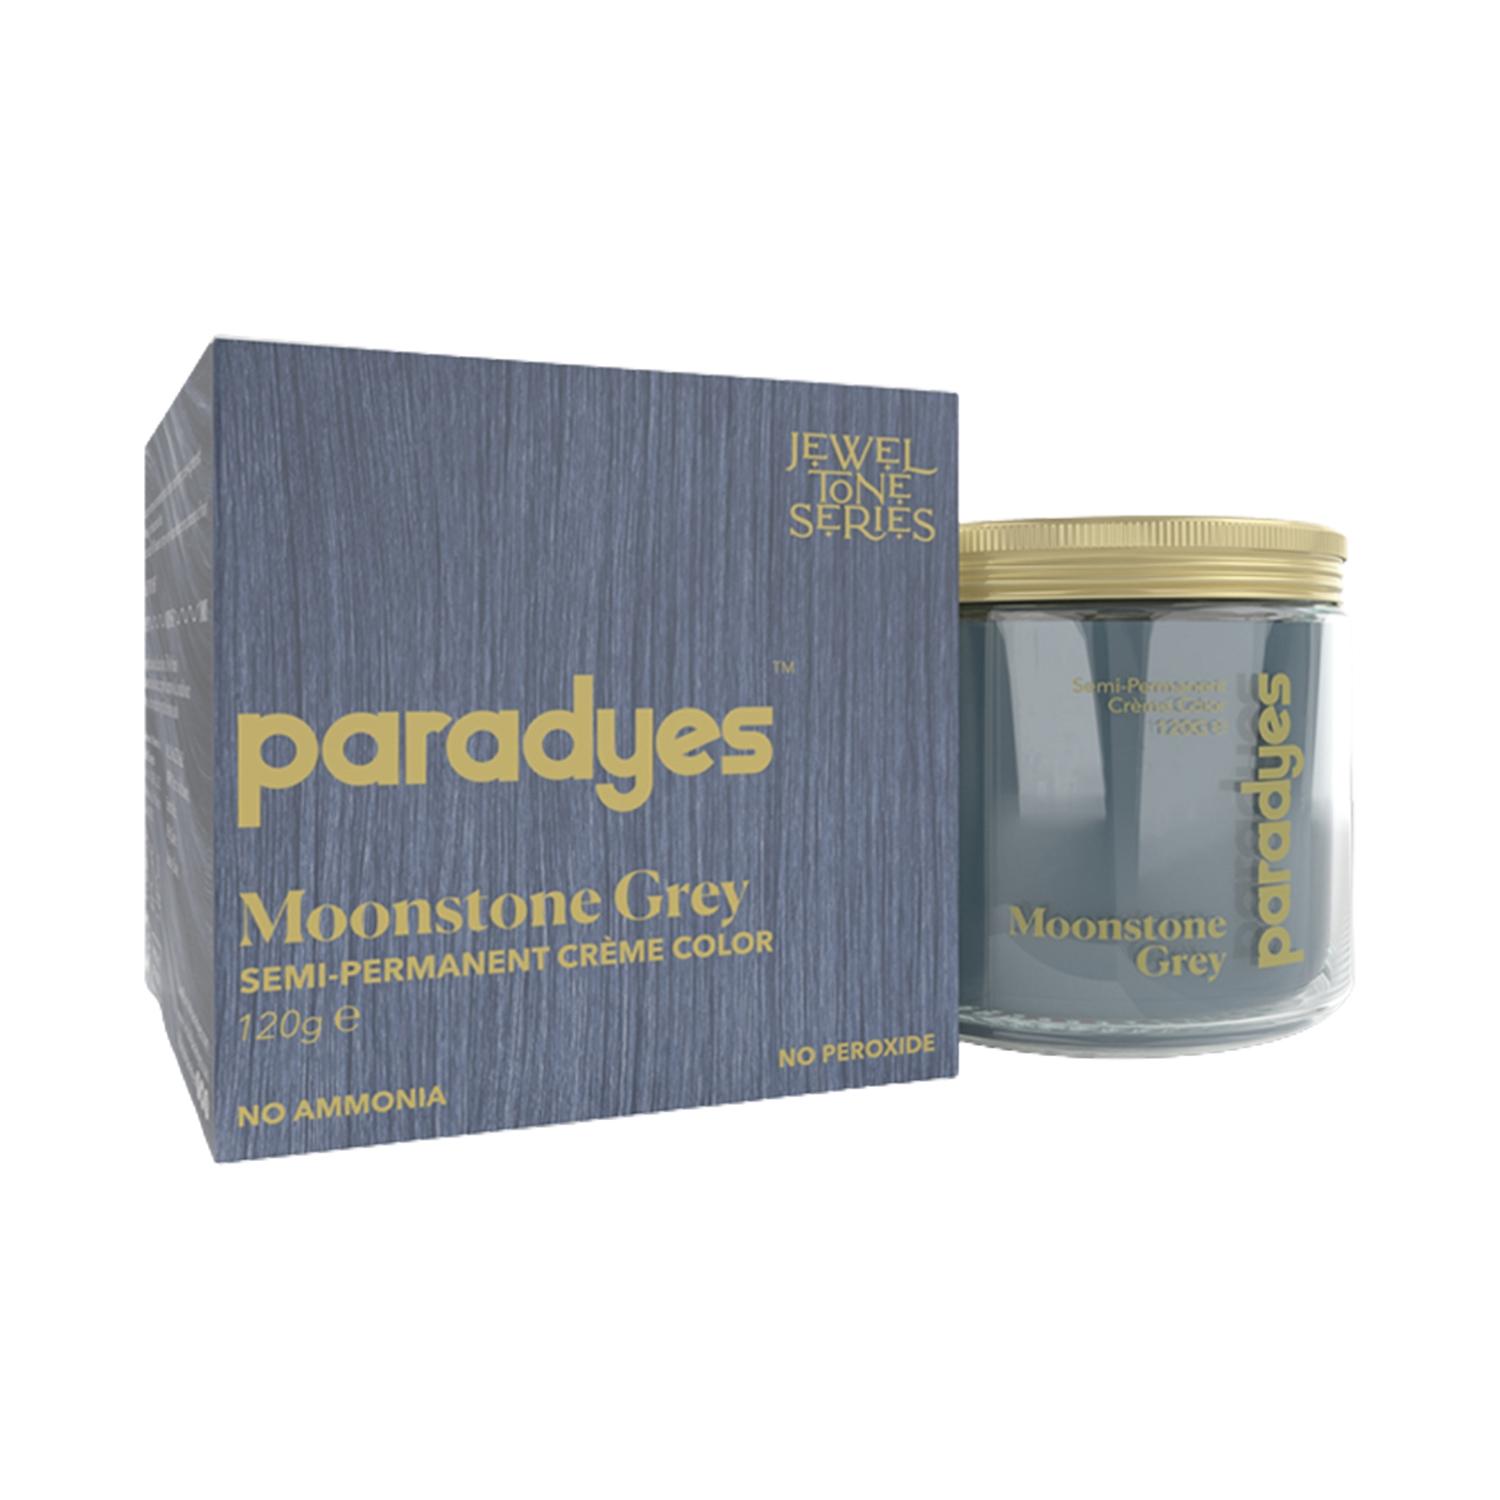 paradyes semi-permanent classic hair color jar - moonstone grey (120g)